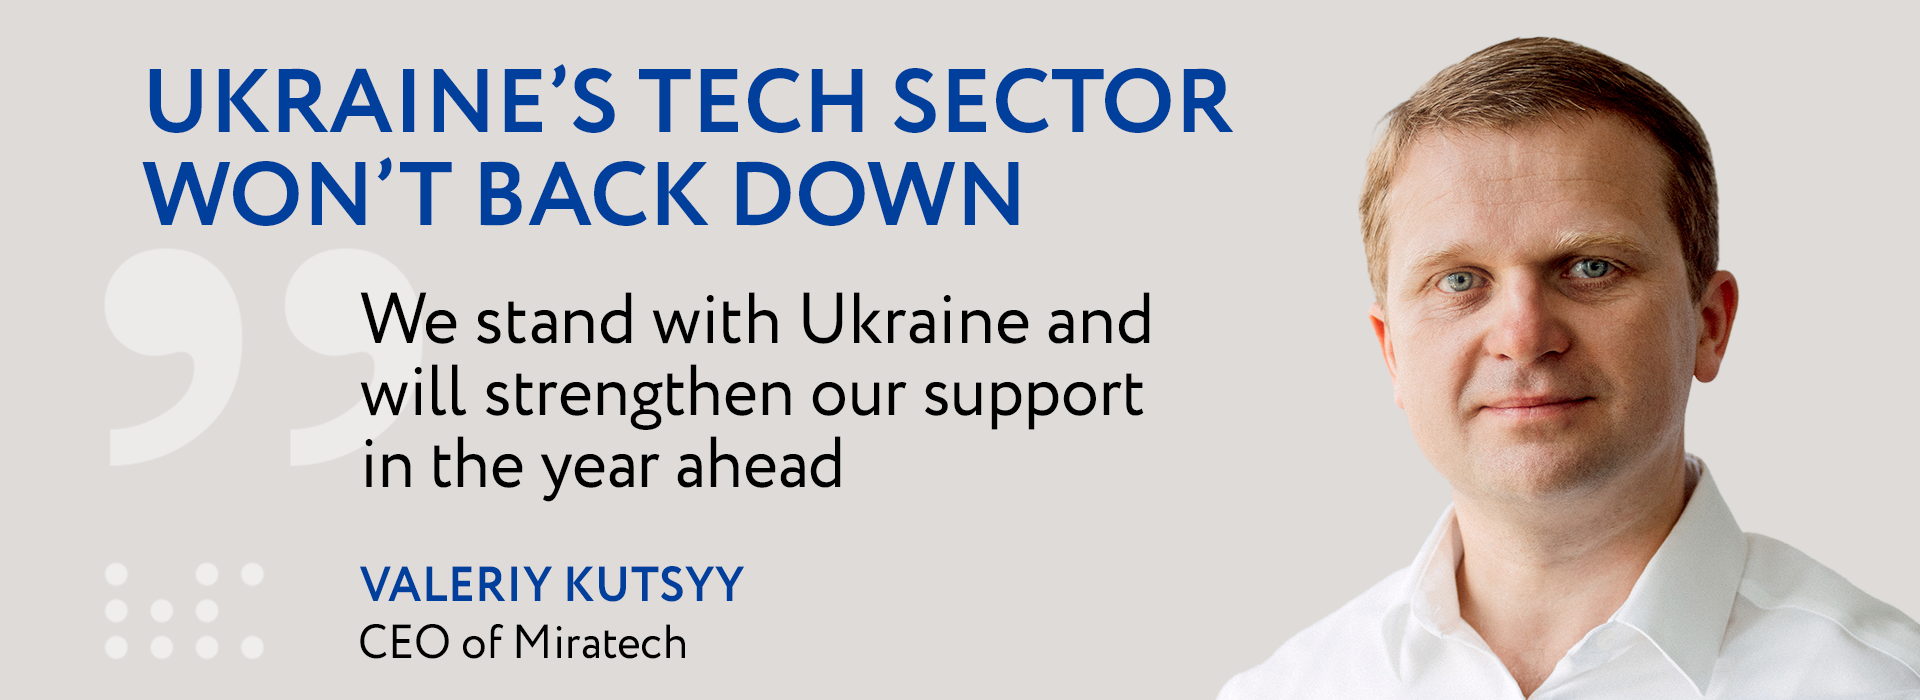 Ukraine’s Tech Sector Won’t Back Down